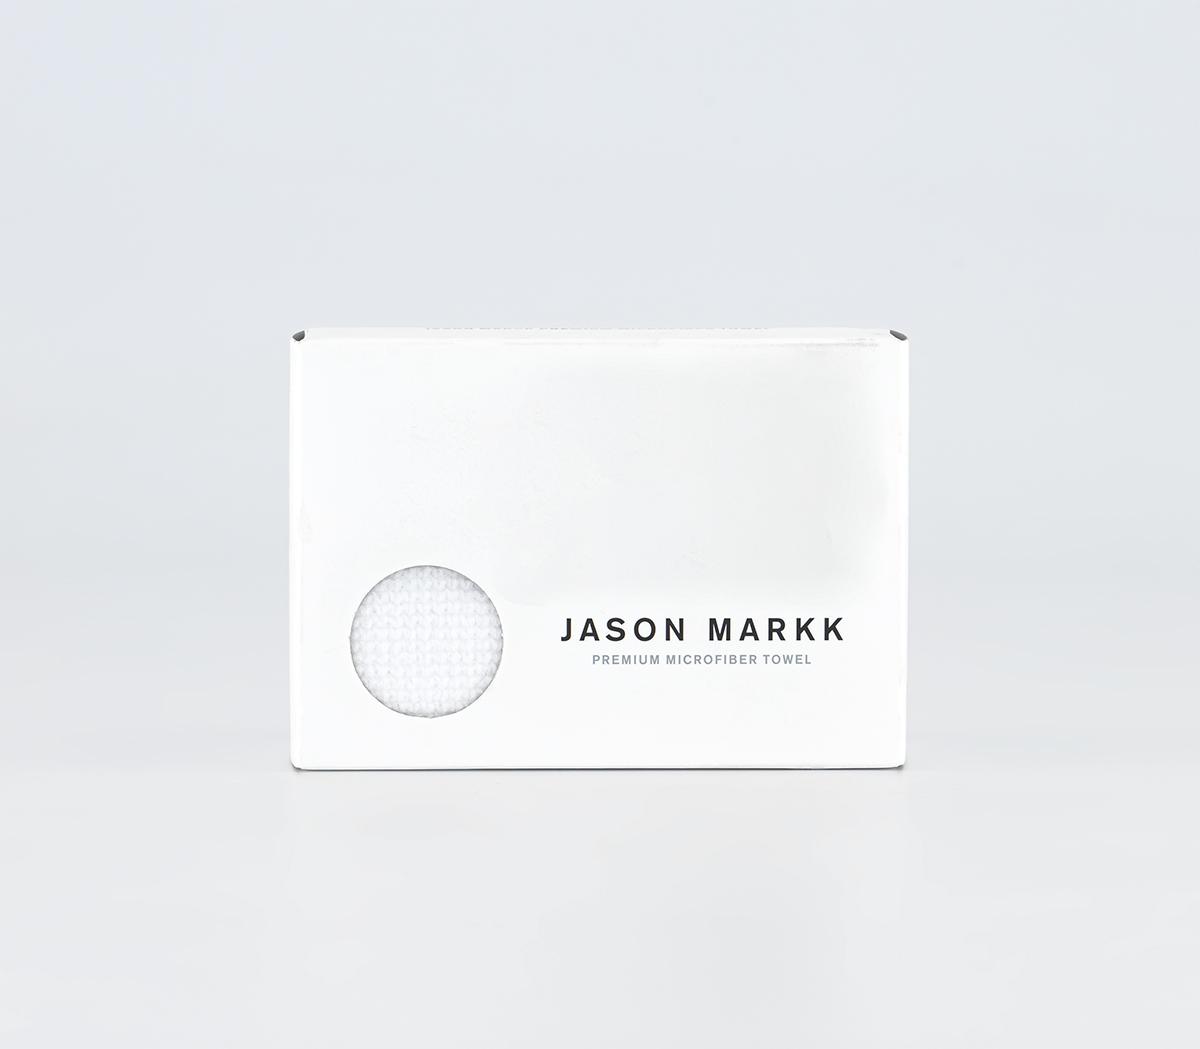 JASON MARKKPremium Microfiber TowelsPremium Microfiber Towel